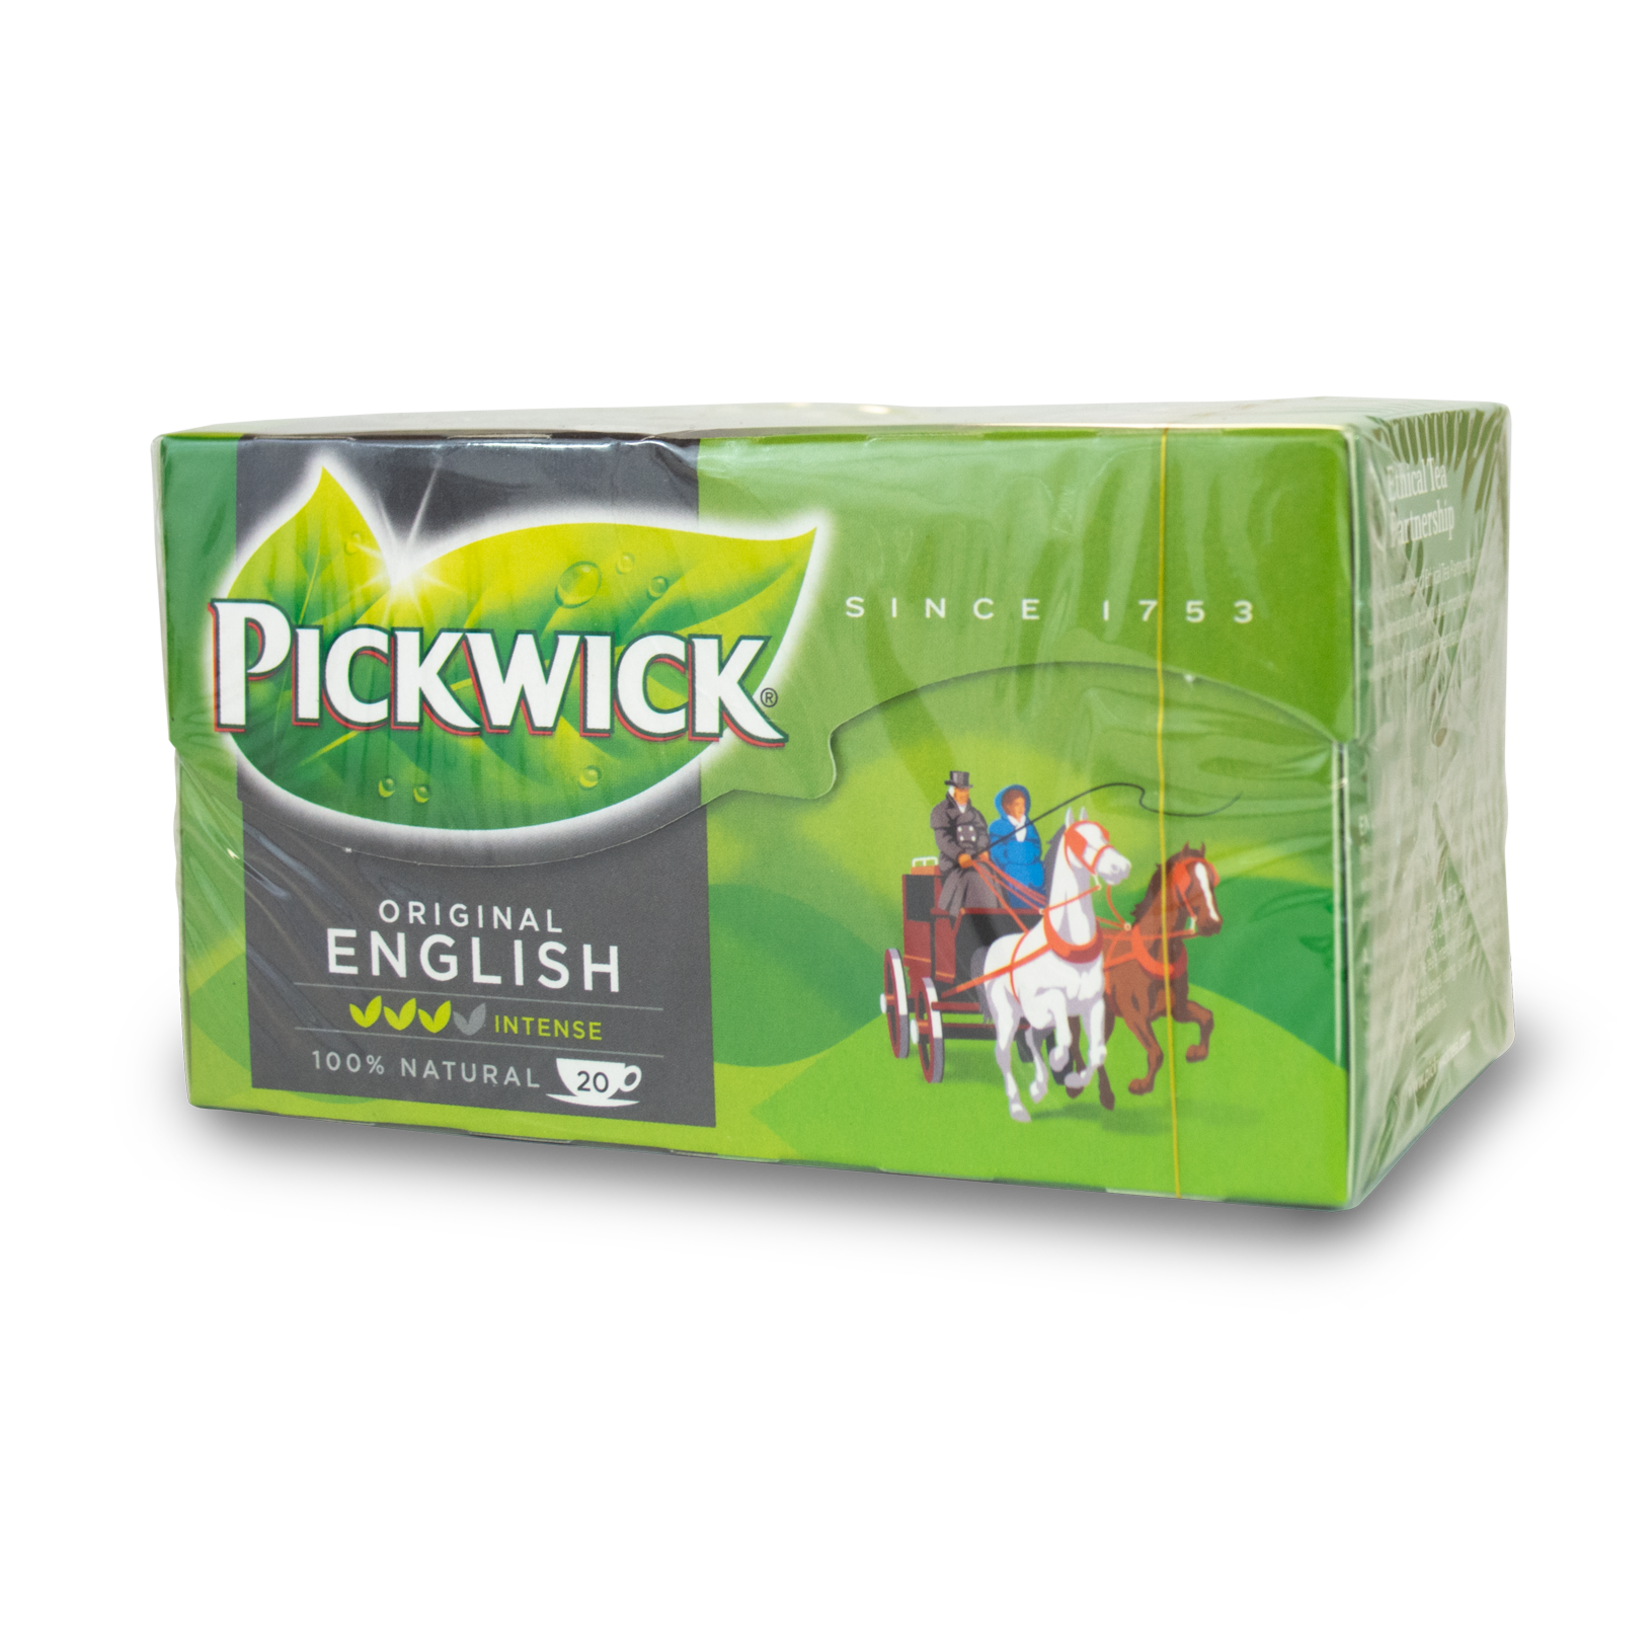 Pickwick Pickwick Original English Tea - Cup